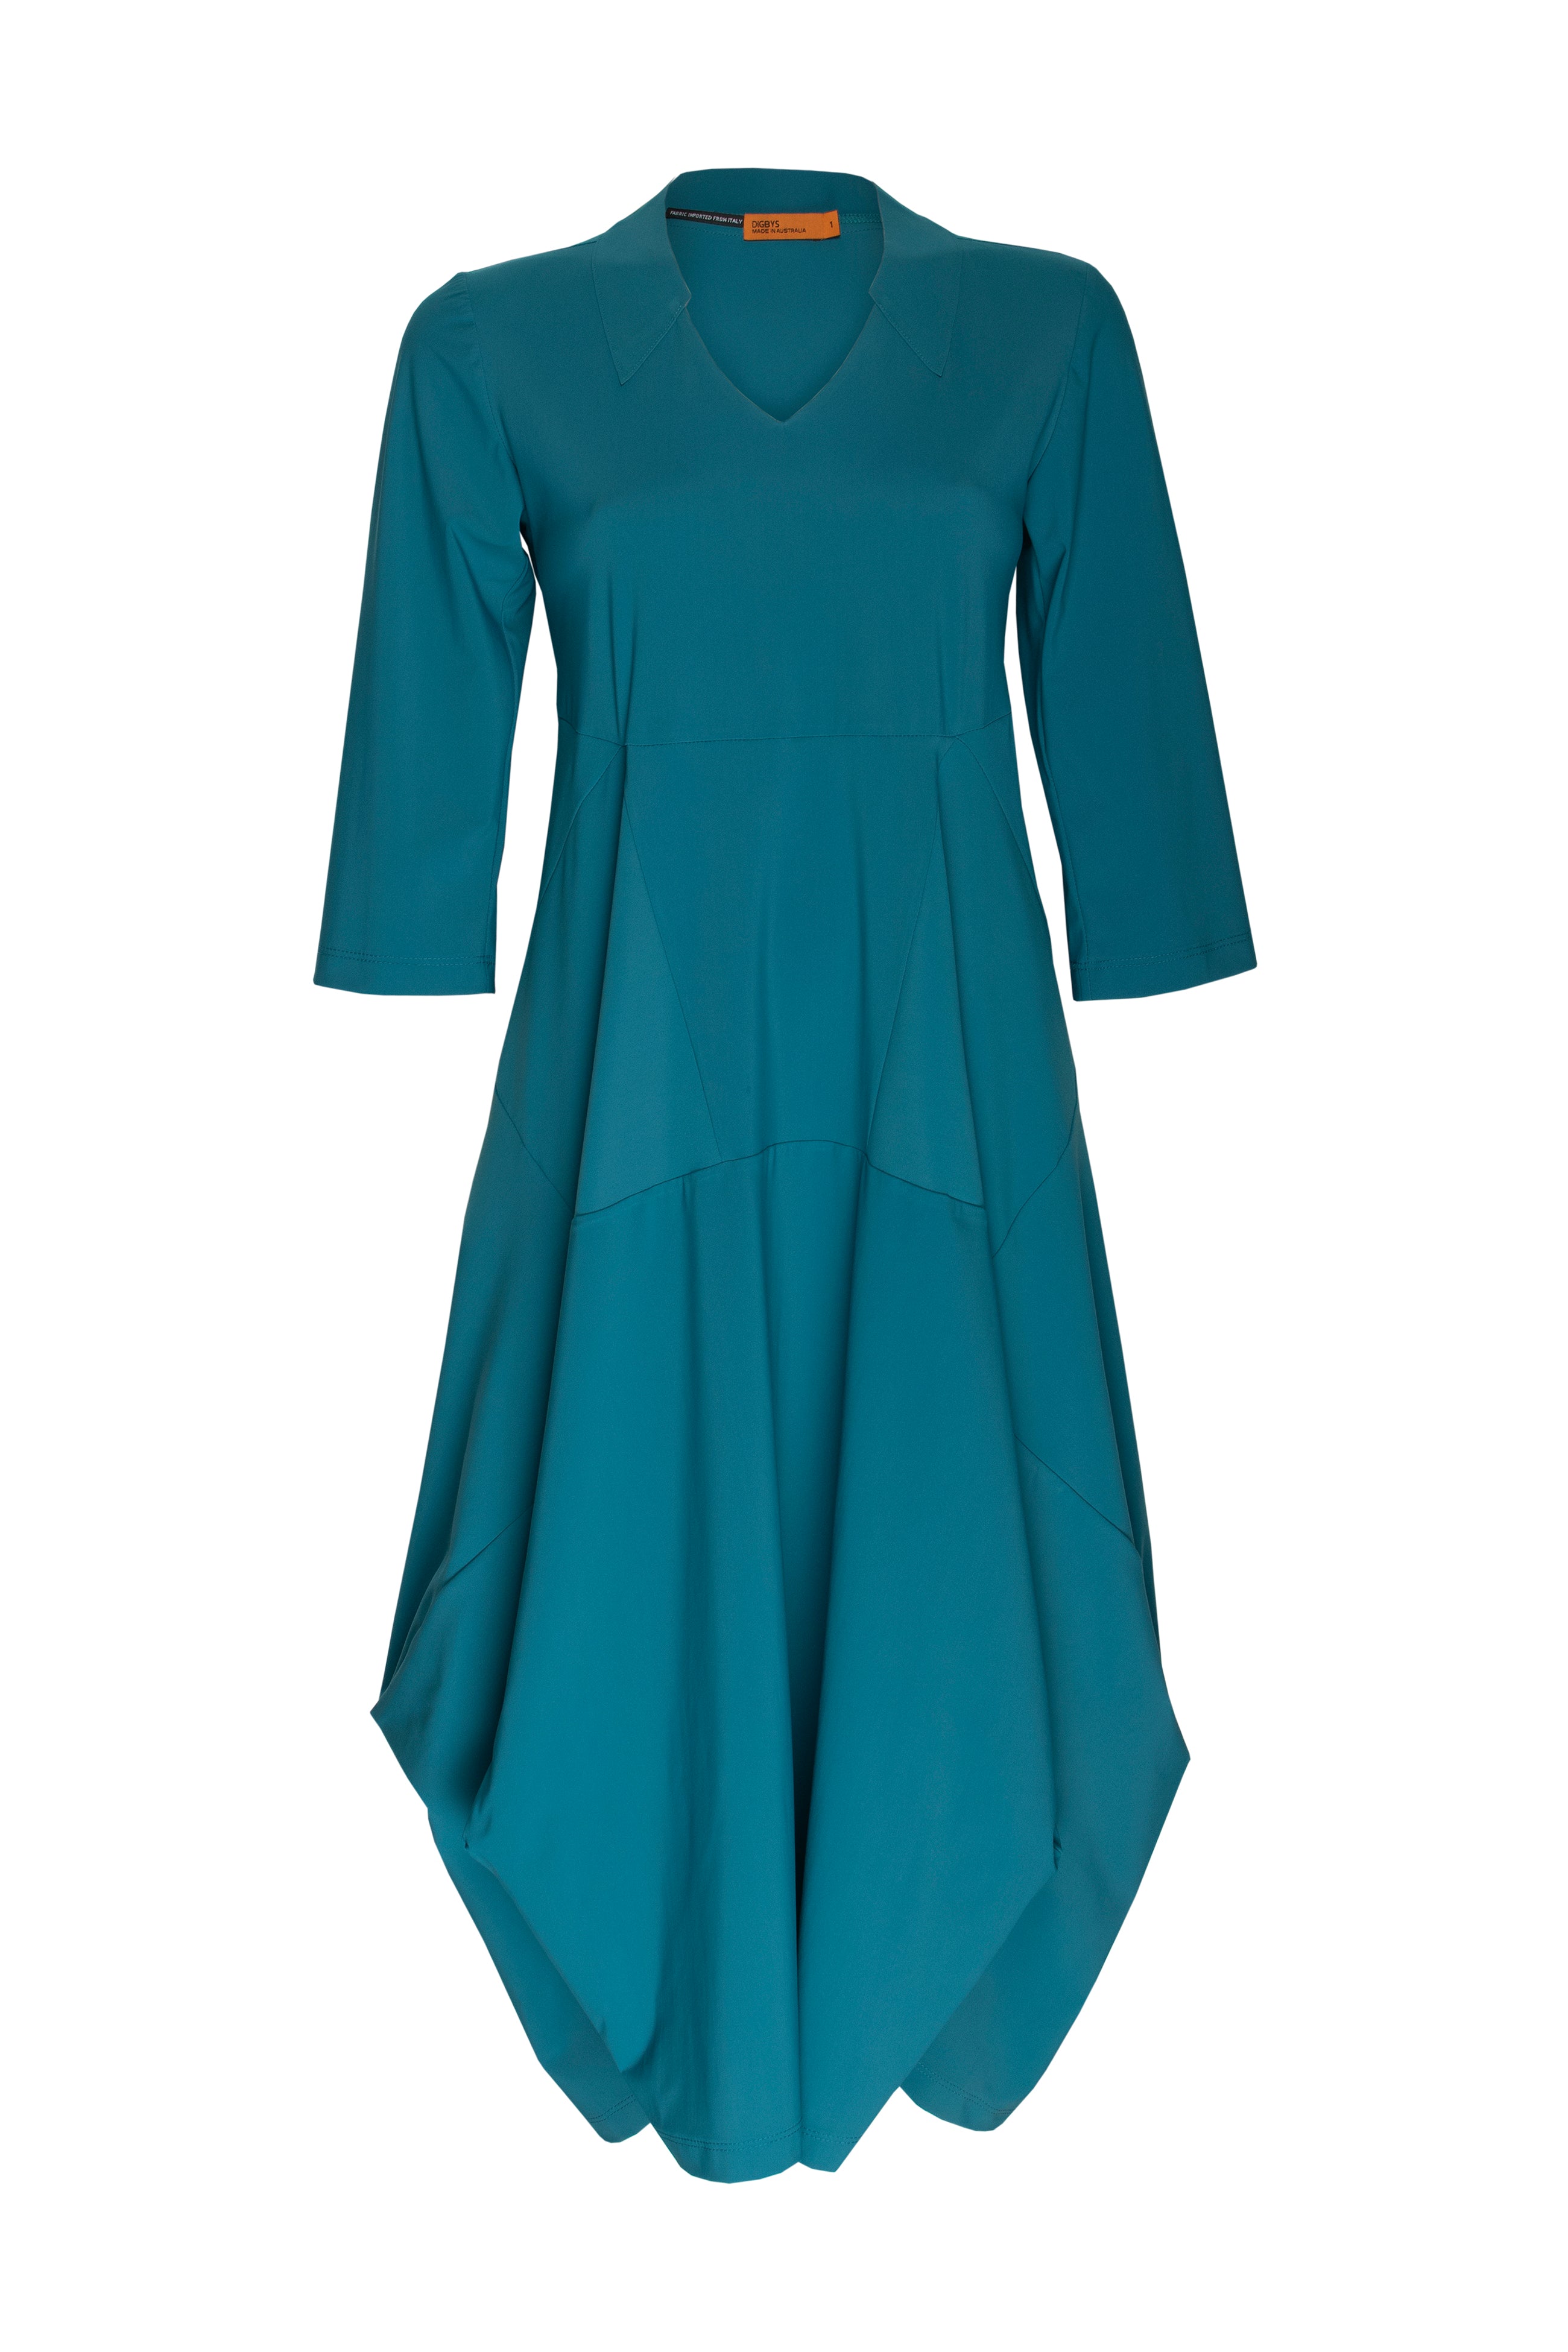 Teal 3/4 Sleeve Vee Neck Multipanel Dress 3276